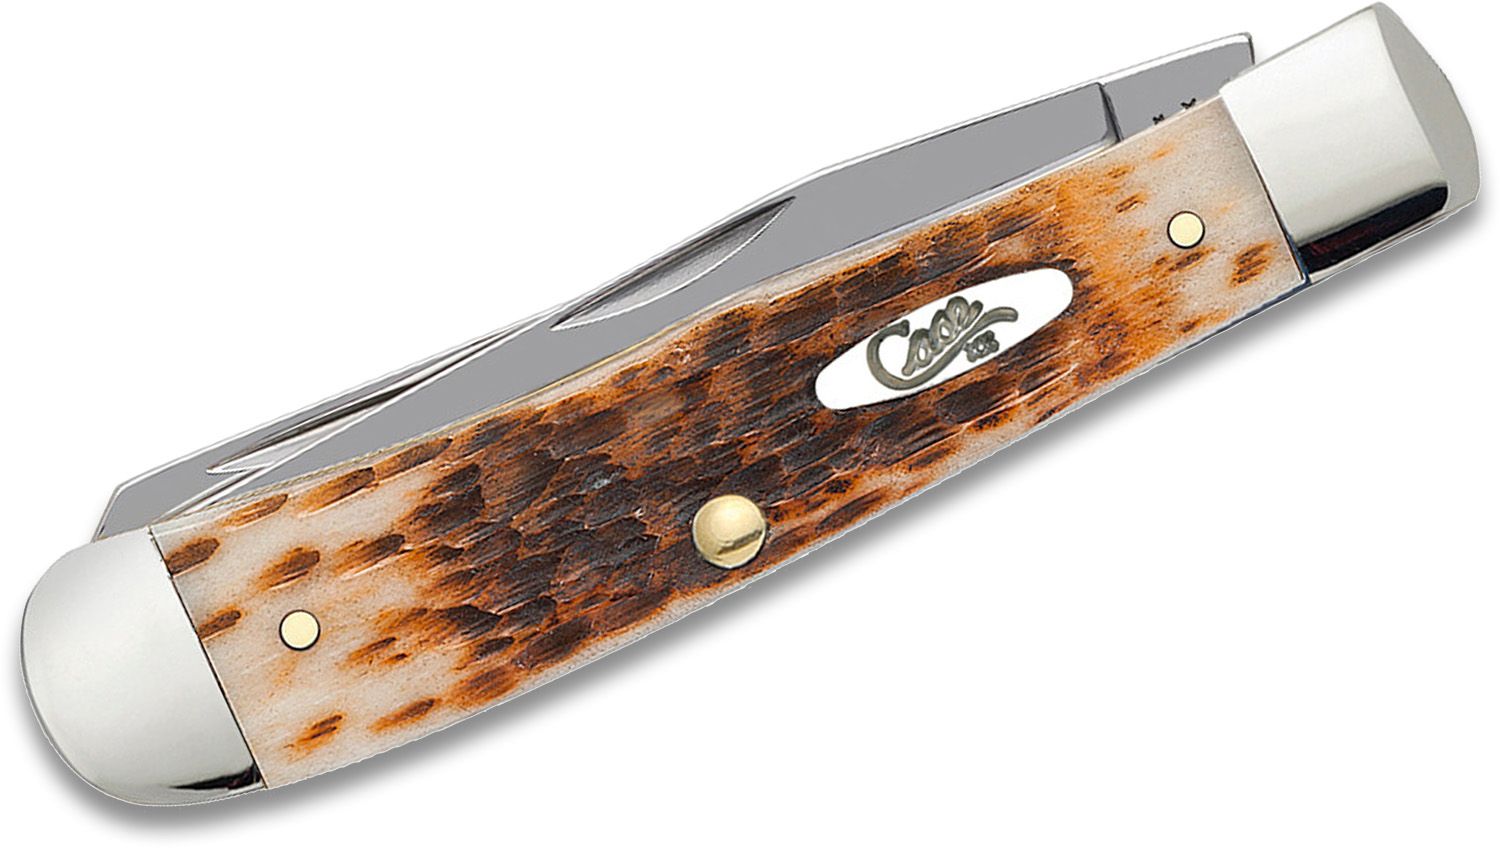 M01 Knife Carbon Steel Trapper 4IN Blade Vertical Sheath(K233